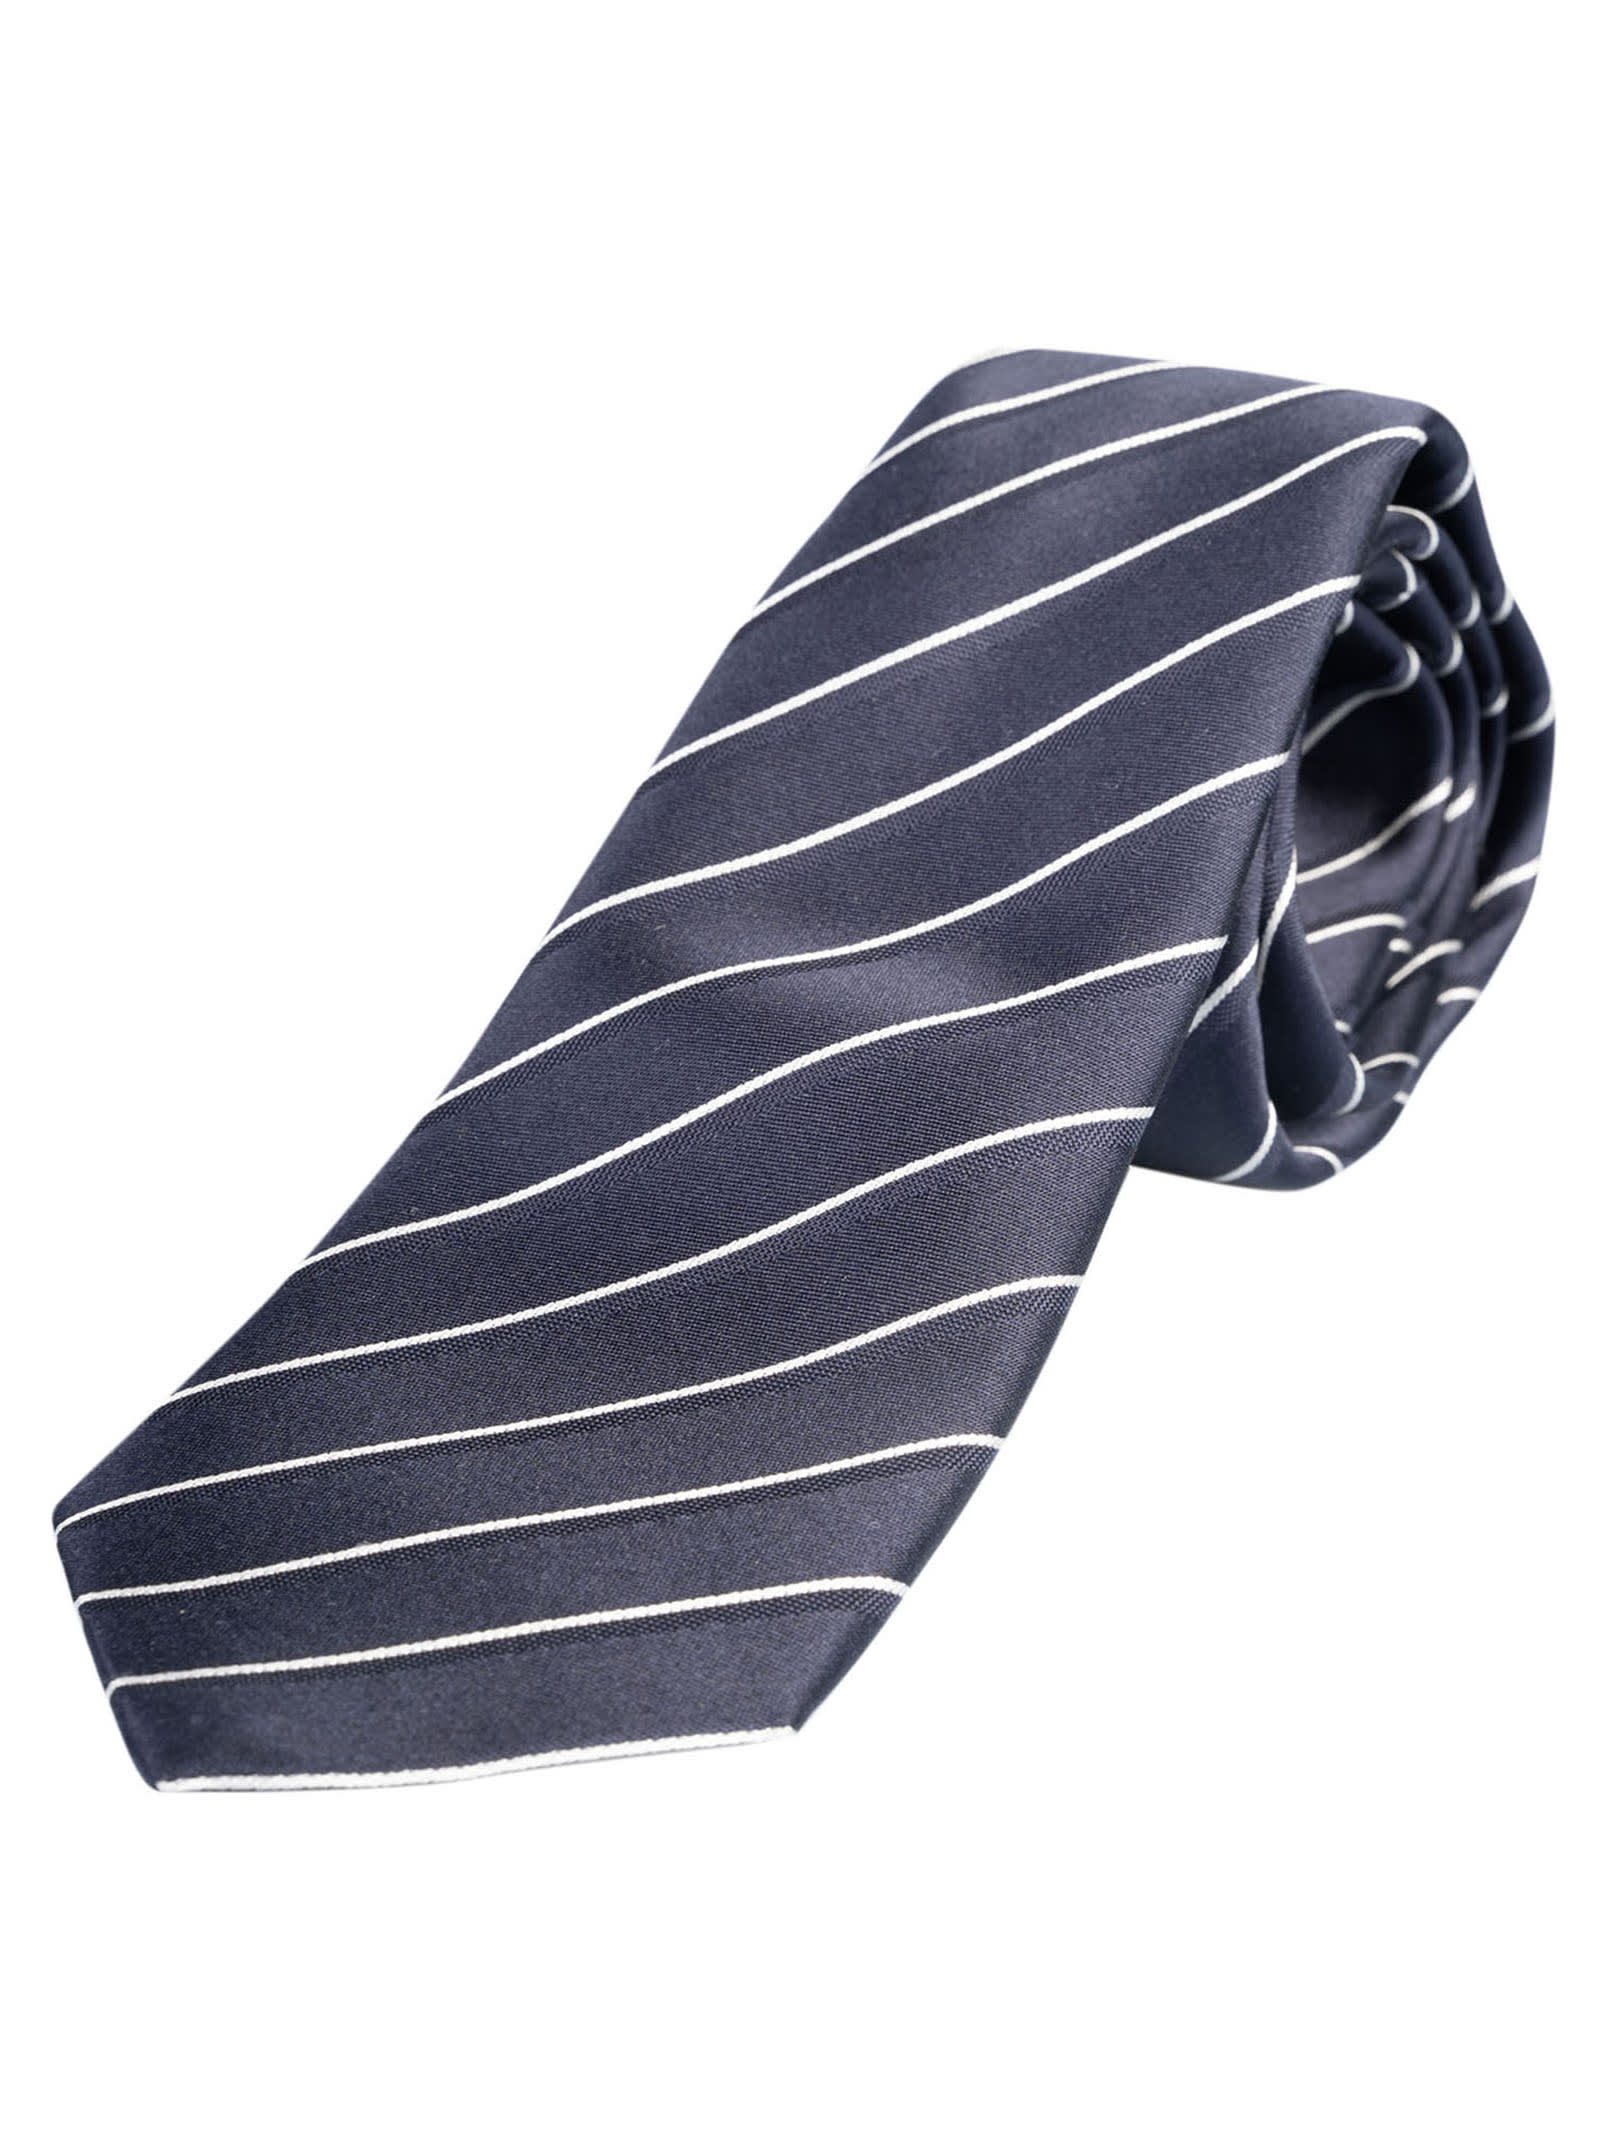 Striped Neck Tie